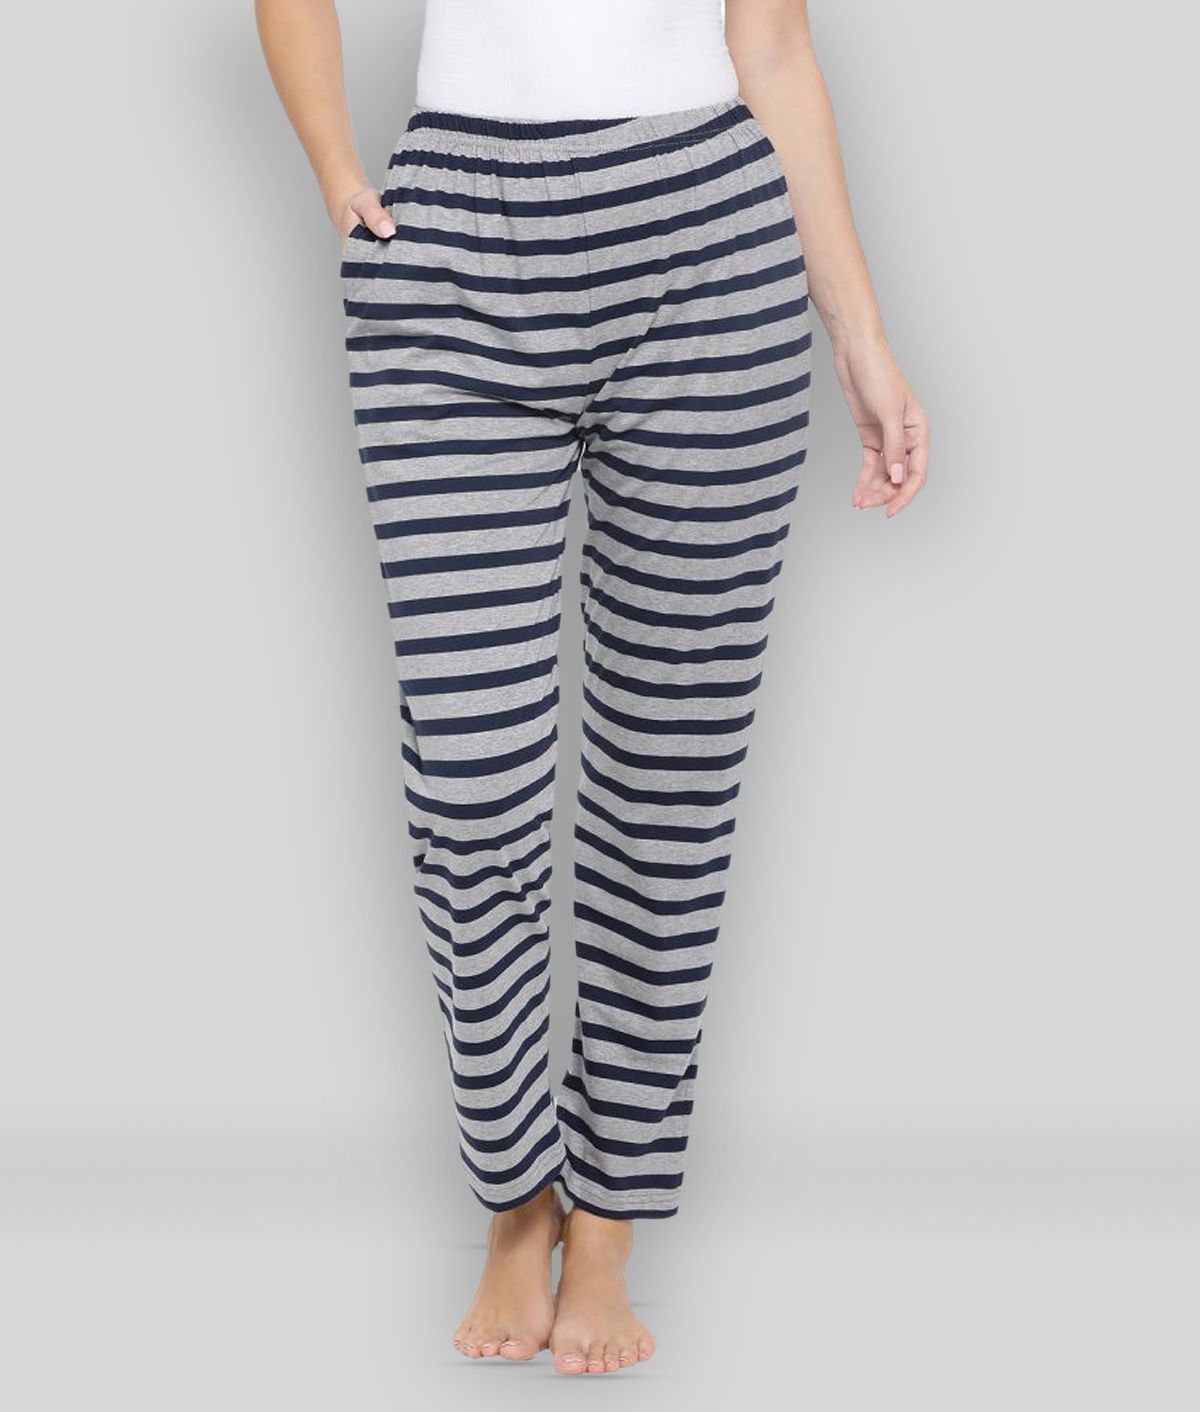     			Clovia - Dark Grey Cotton Women's Nightwear Pyjama